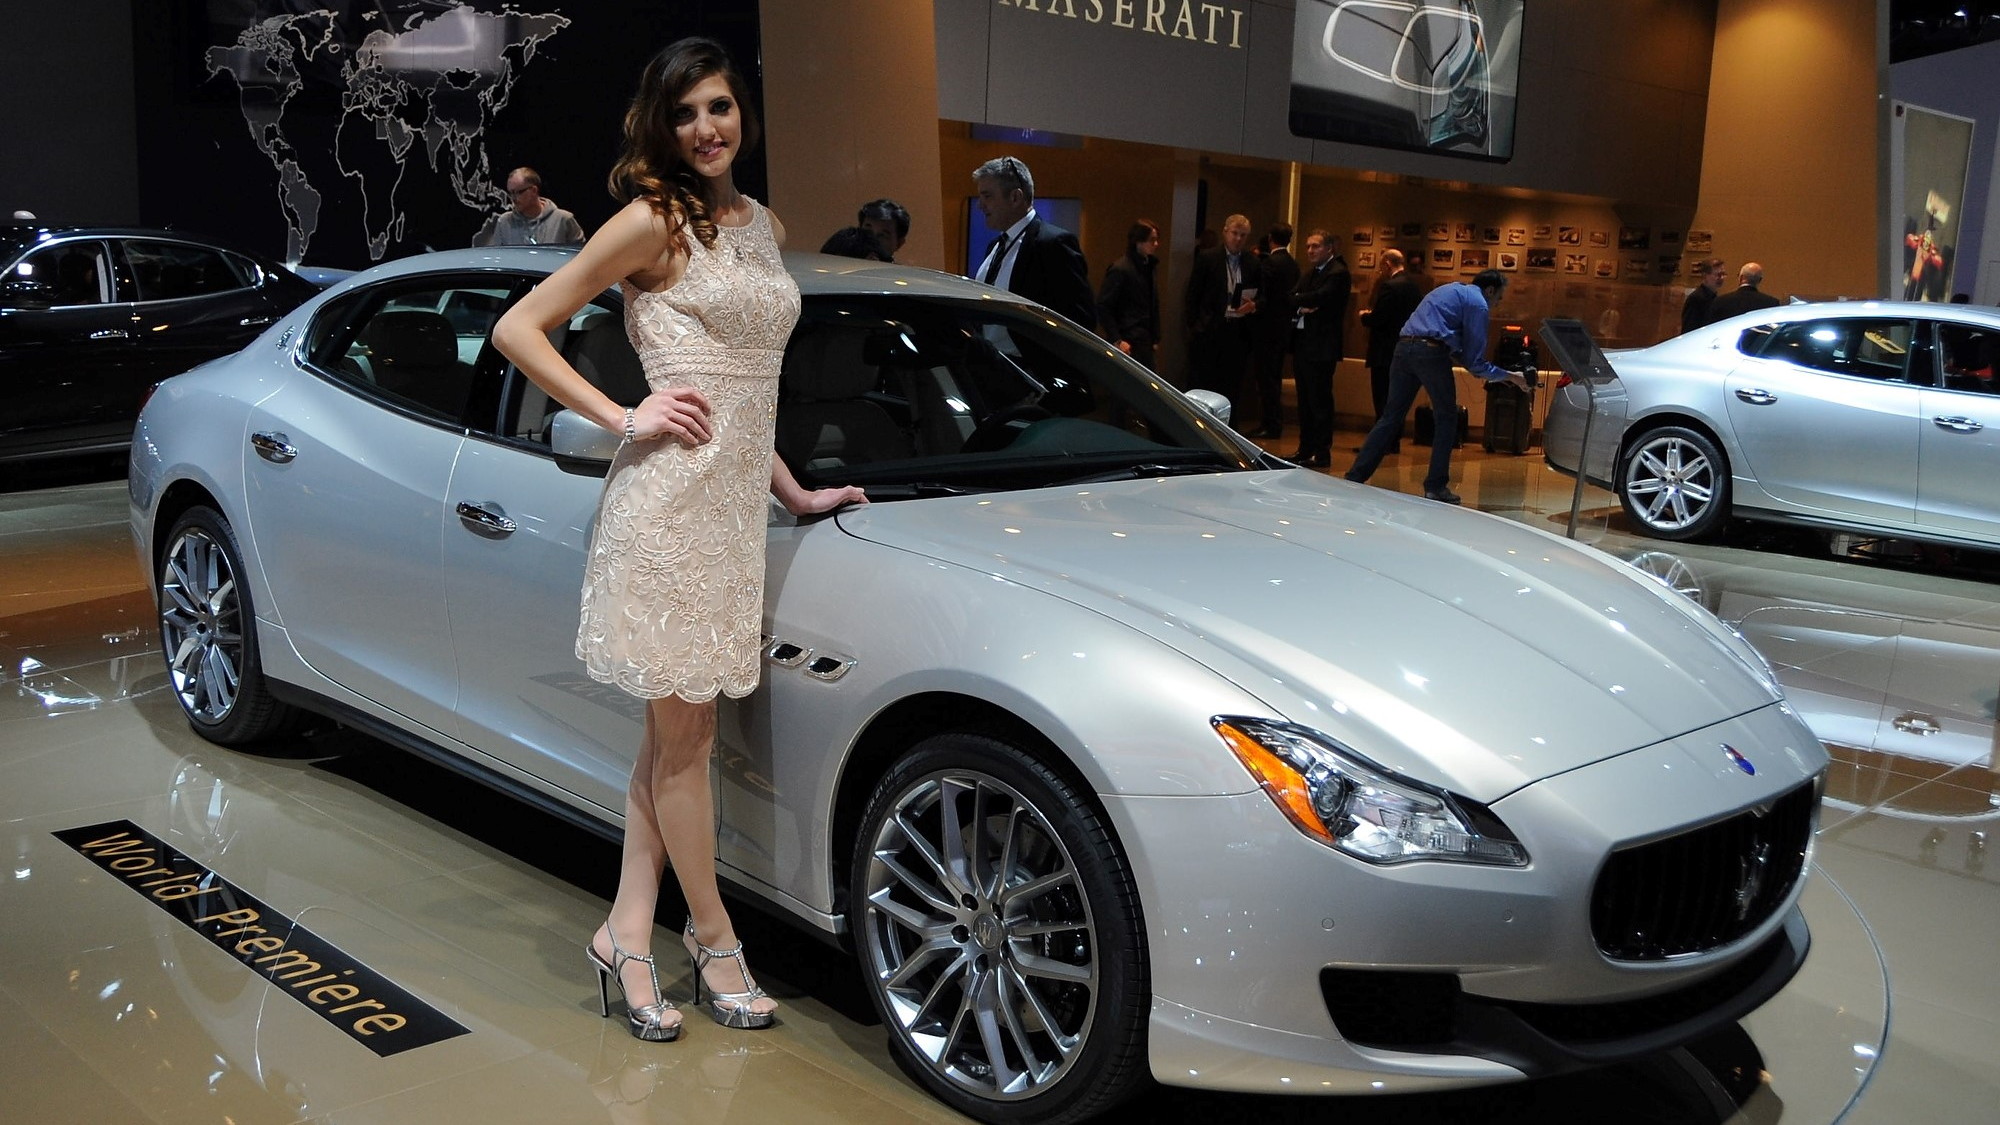 2014 Maserati Quattroporte live photos, 2013 Detroit Auto Show